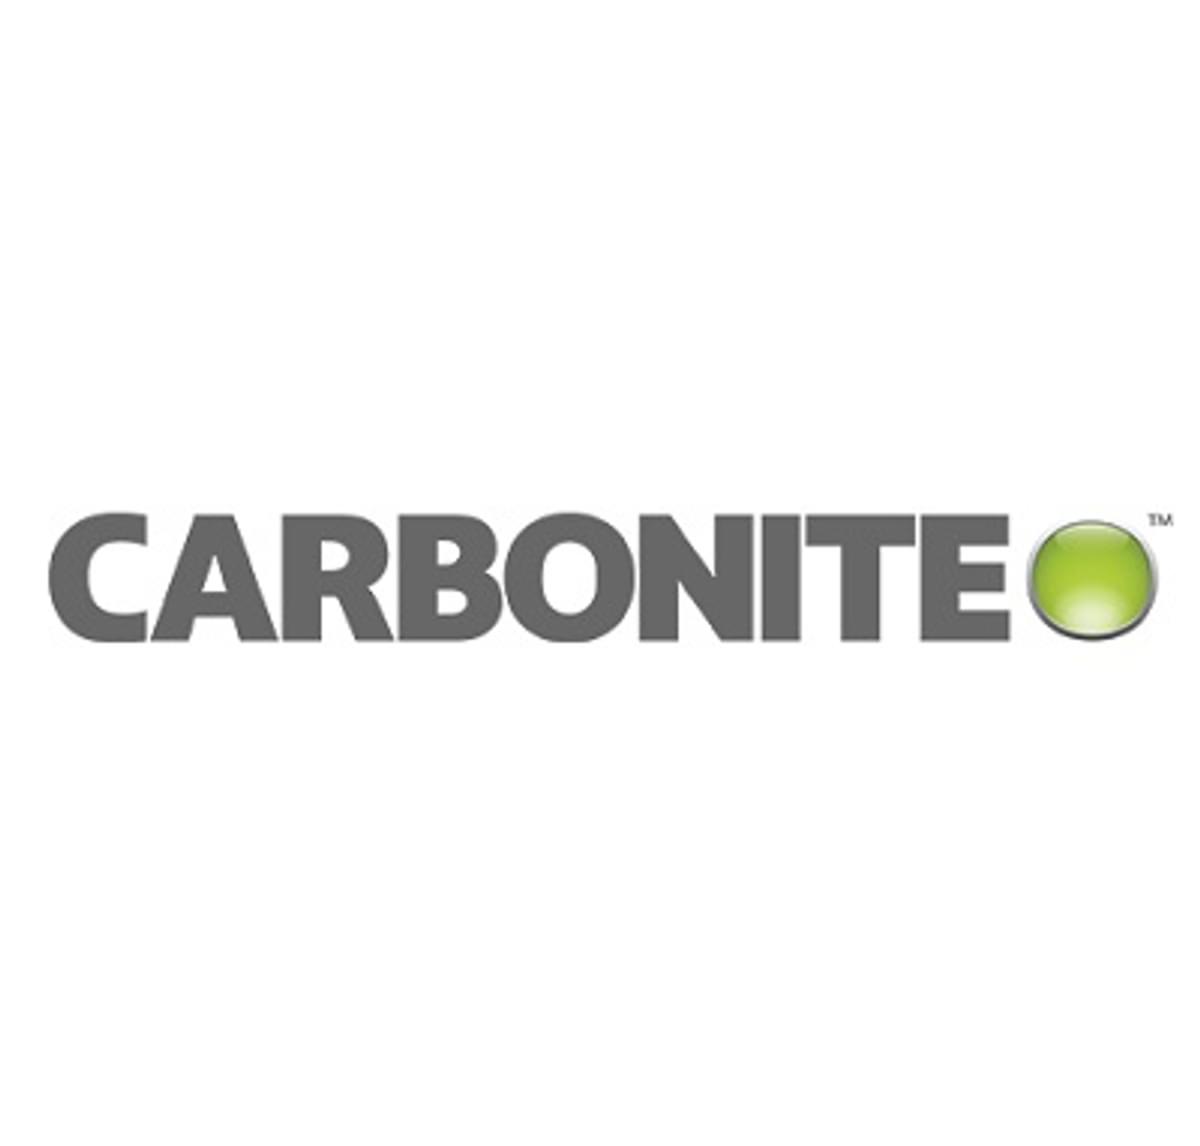 Carbonite koopt Webroot voor ongeveer 618,5 miljoen dollar image